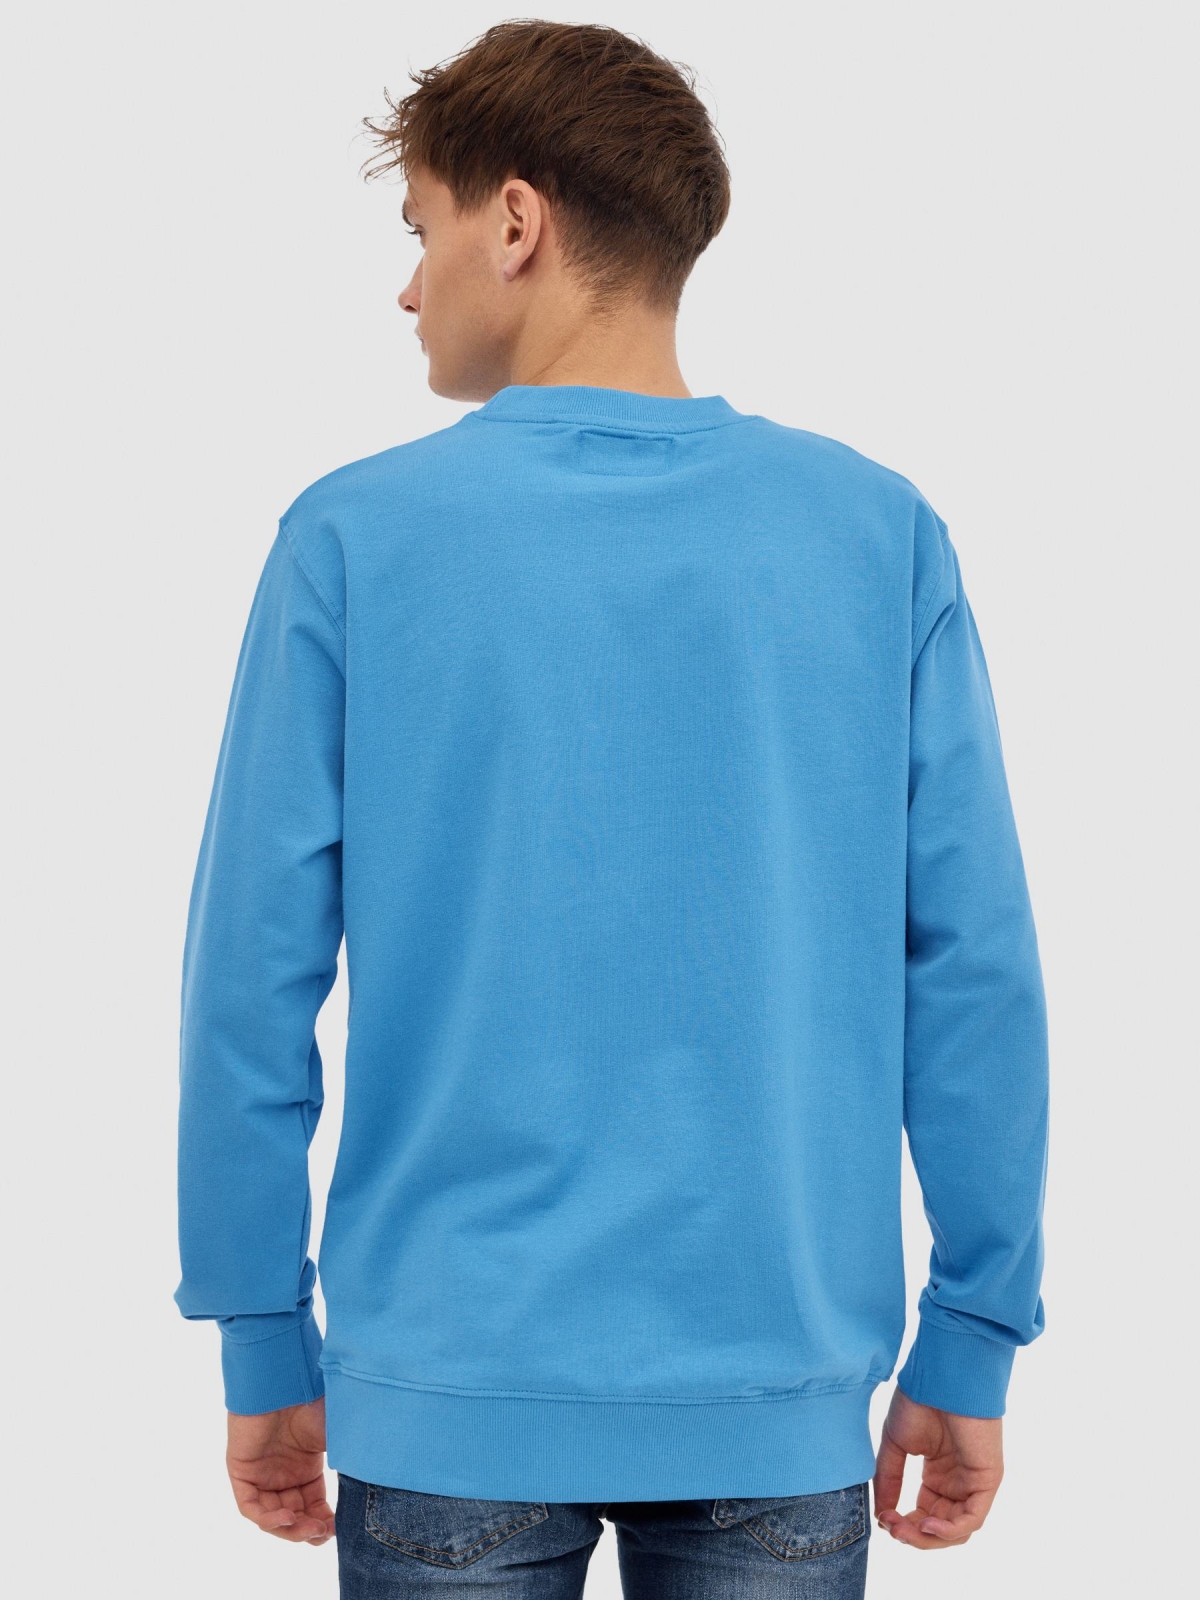 INSIDE hoodless sweatshirt blue middle back view